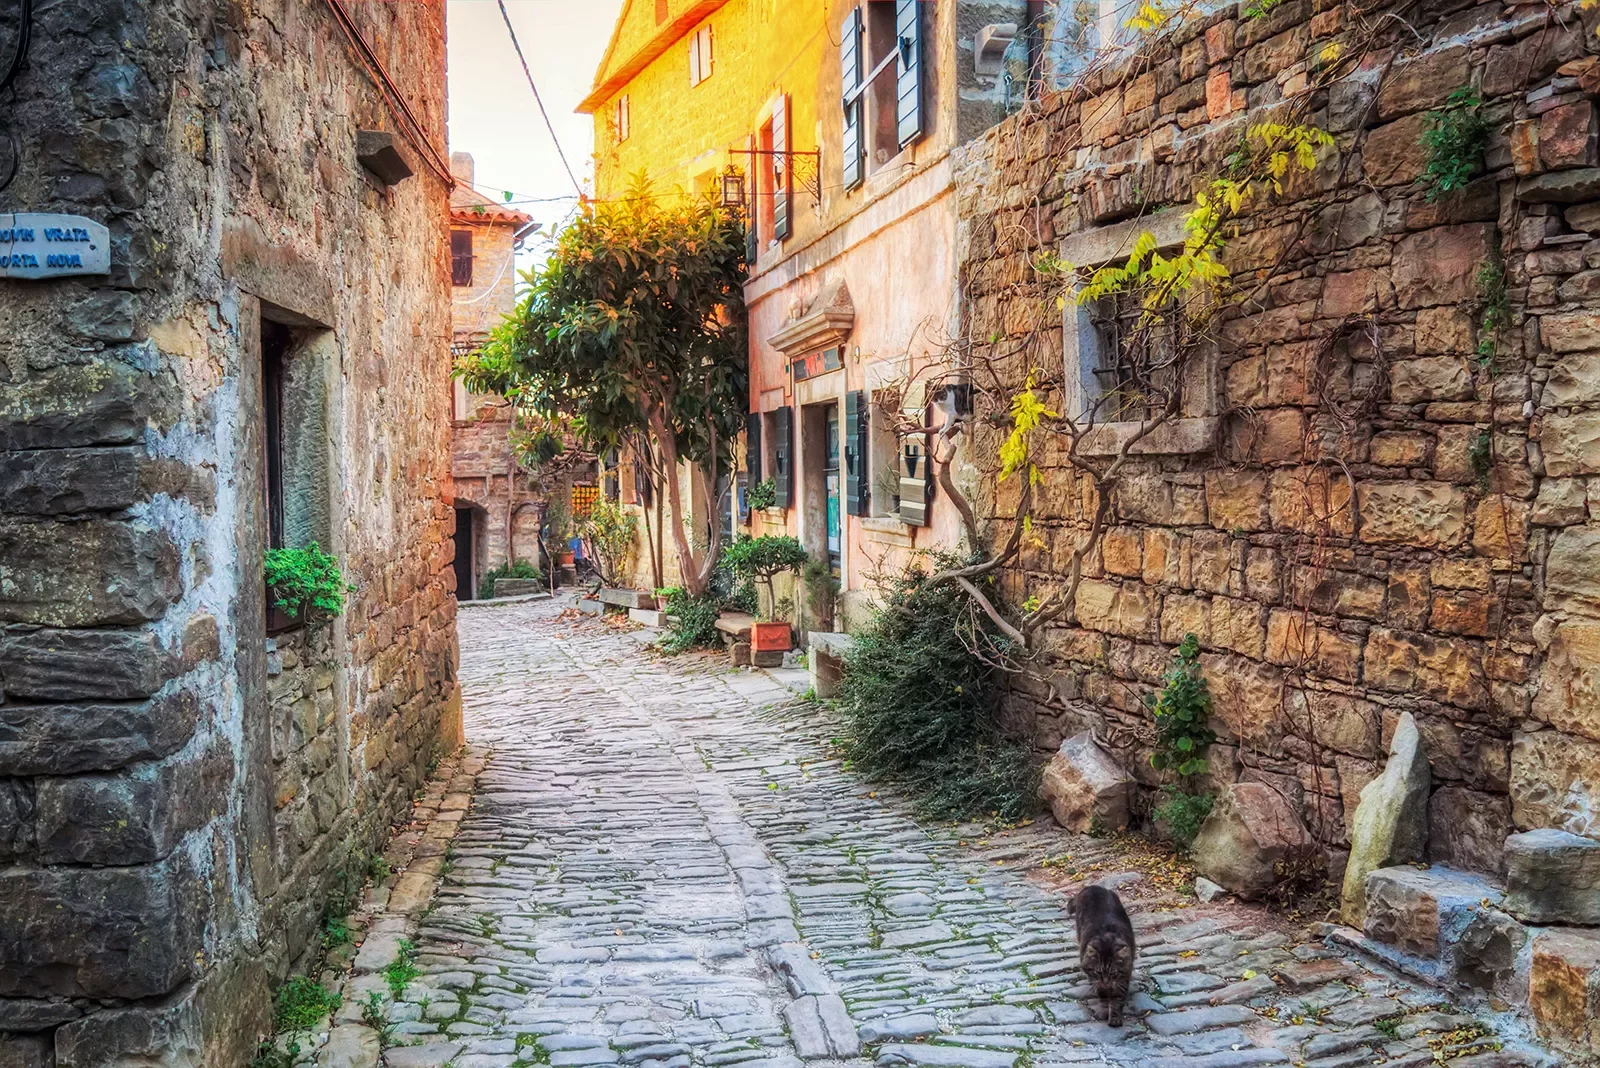 Cat running down European cobblestone alleyway.